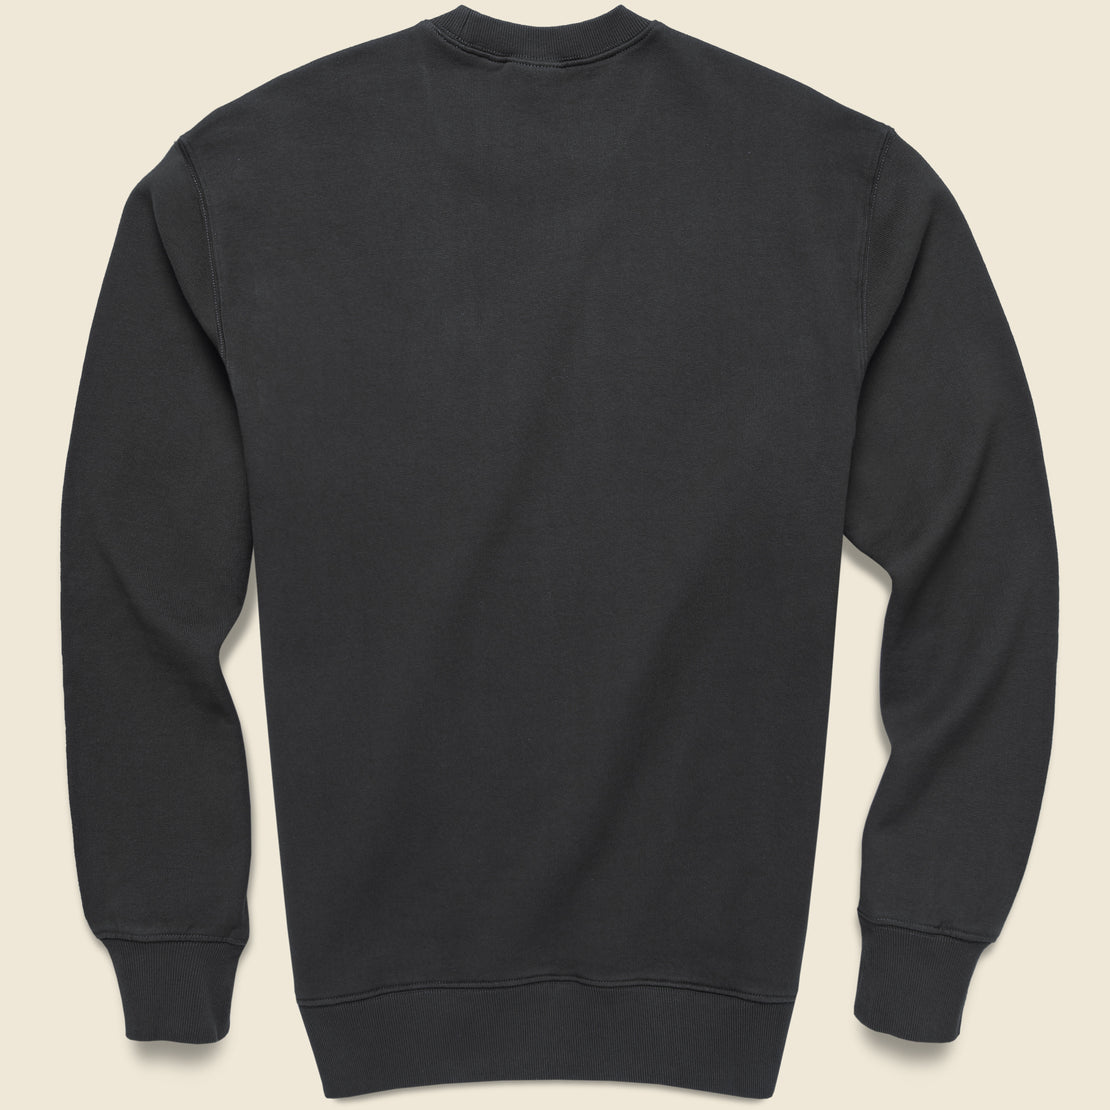 Pocket Sweatshirt - Black - Carhartt WIP - STAG Provisions - Tops - Fleece / Sweatshirt